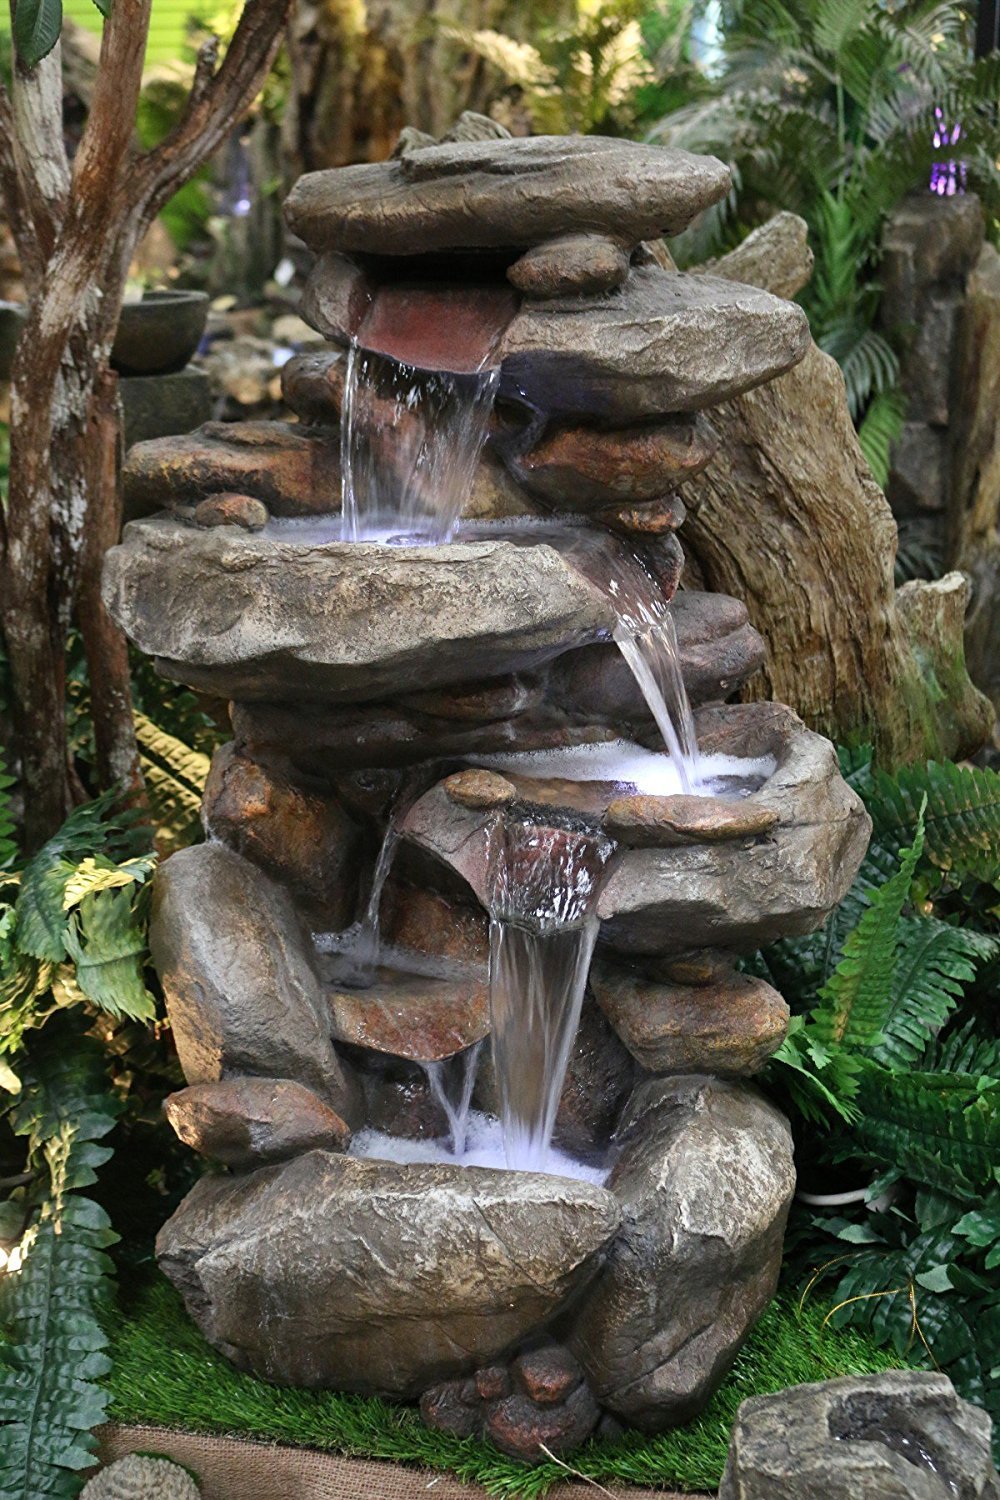 Floor Water Fountain Electric Pump Rock Garden Outdoor Yard Patio Pond